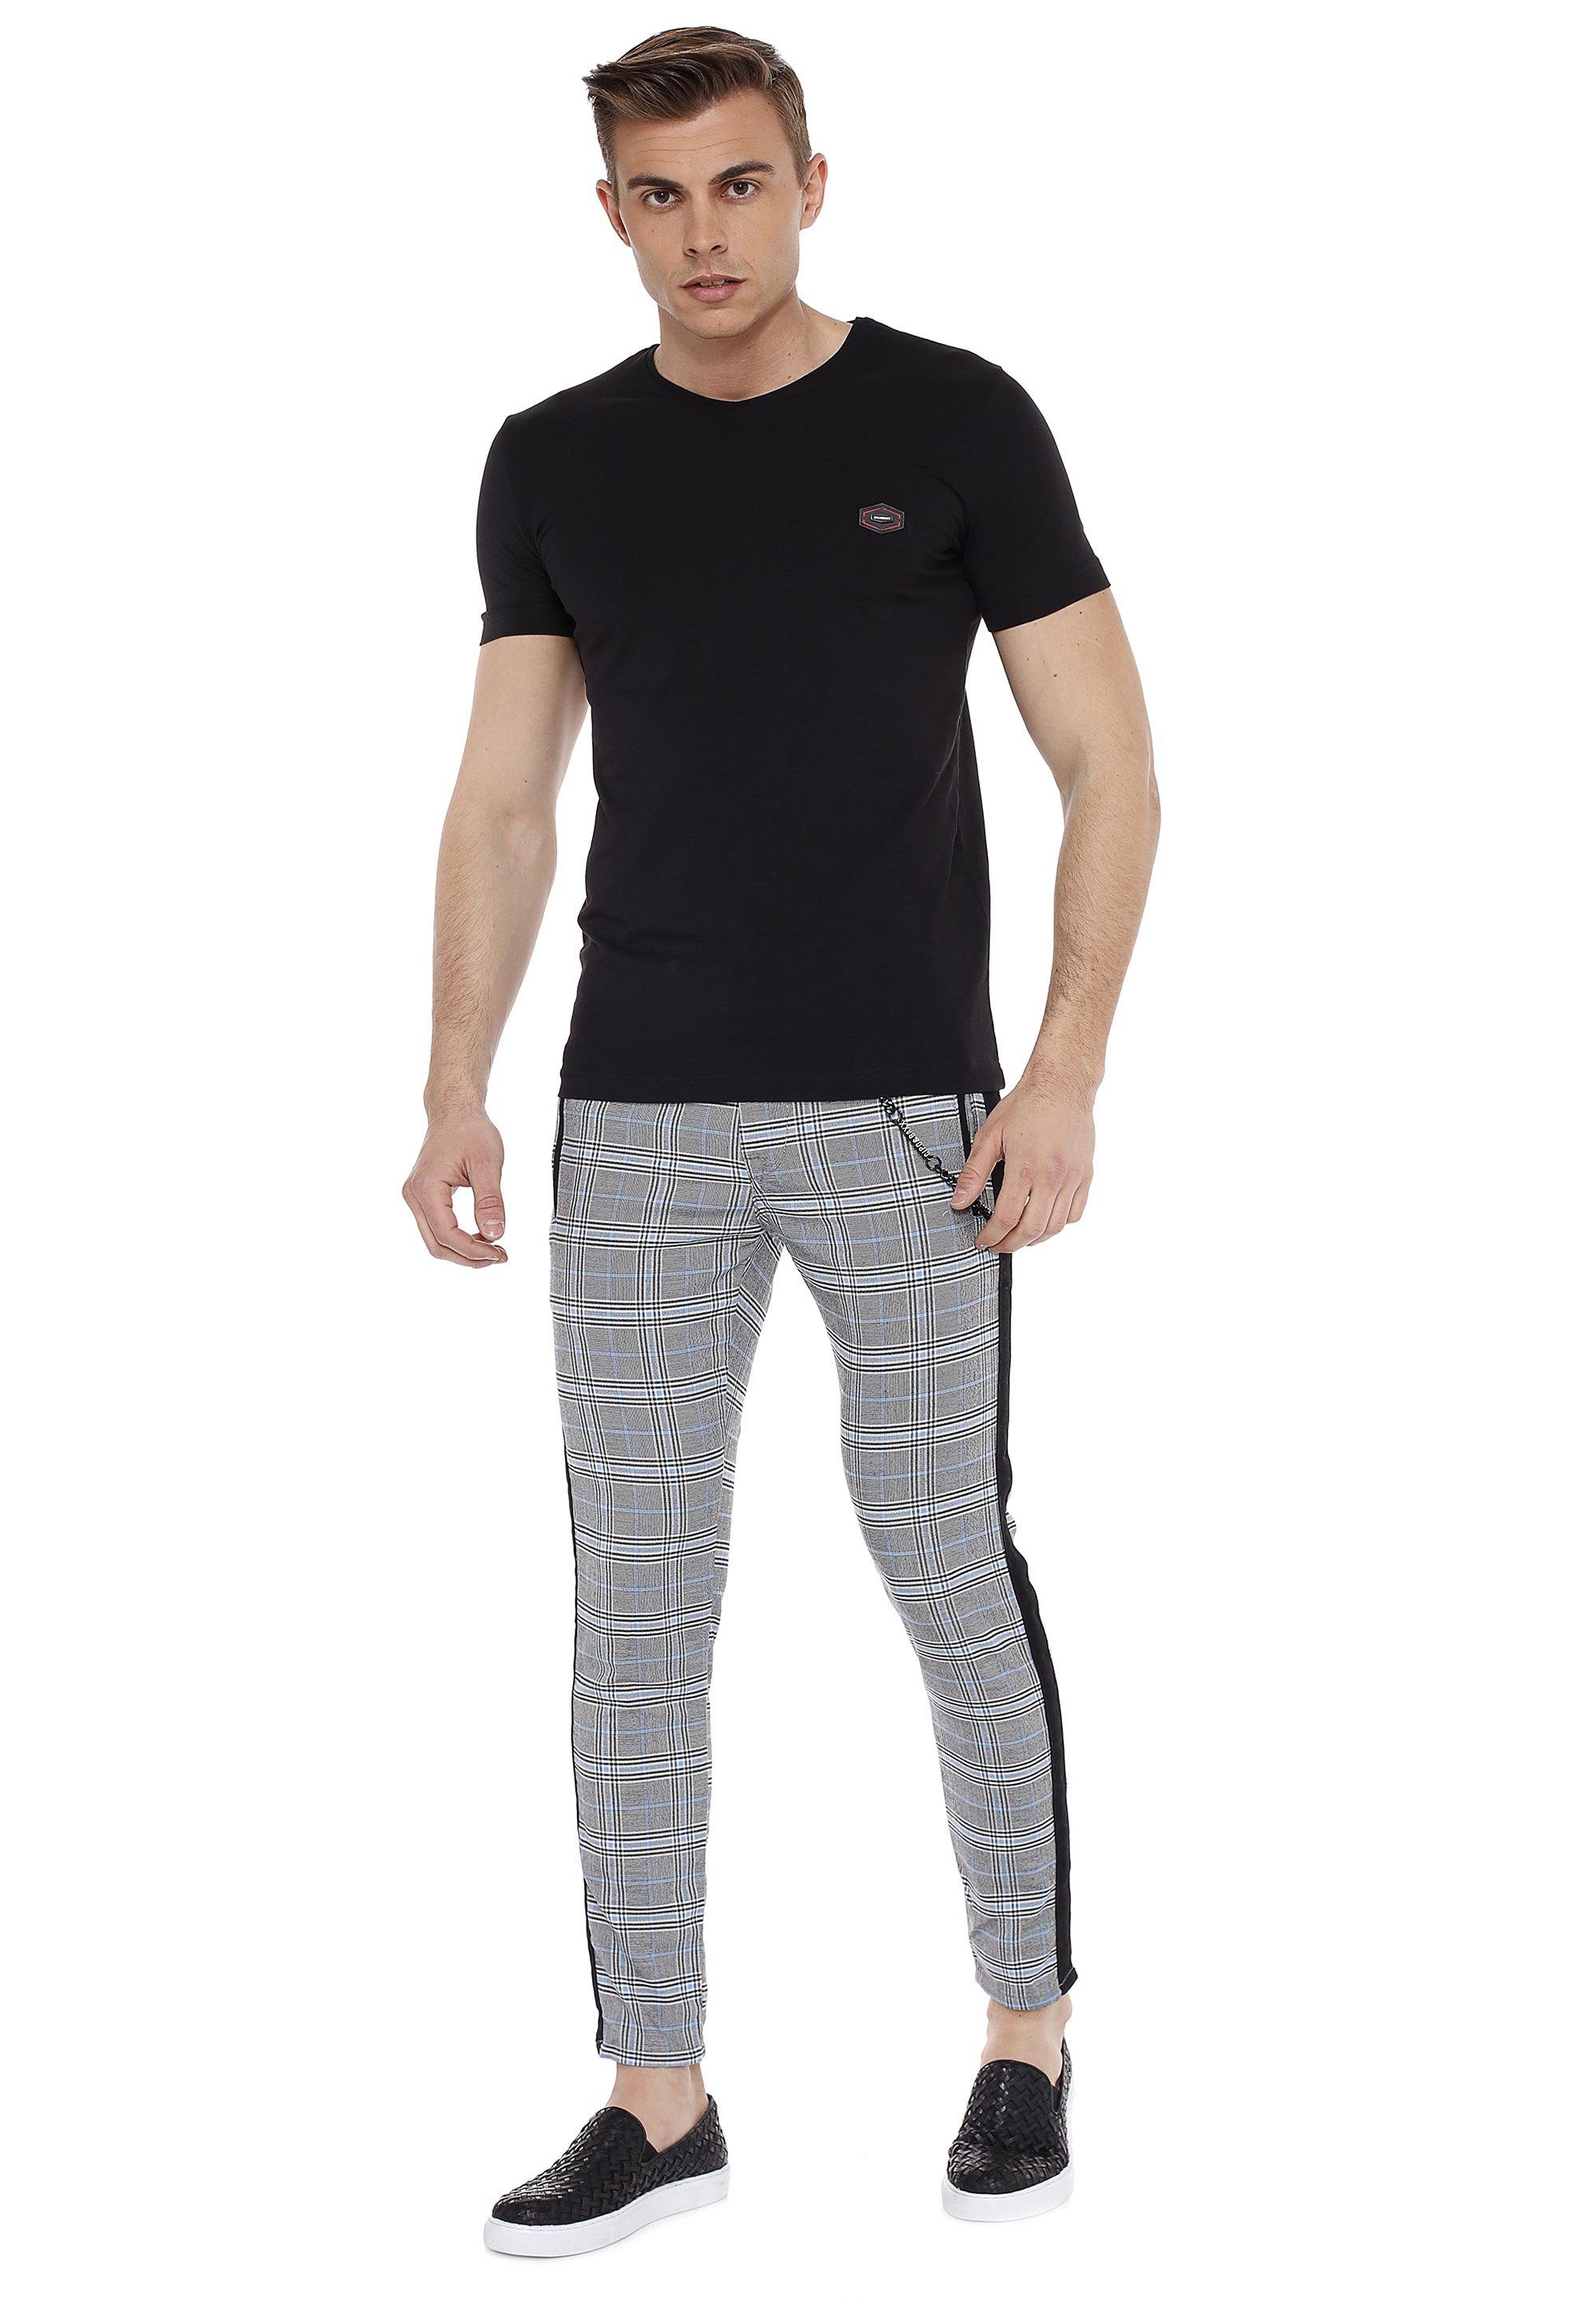 Baxx Cipo Loose-Fit T-Shirt im & schwarz